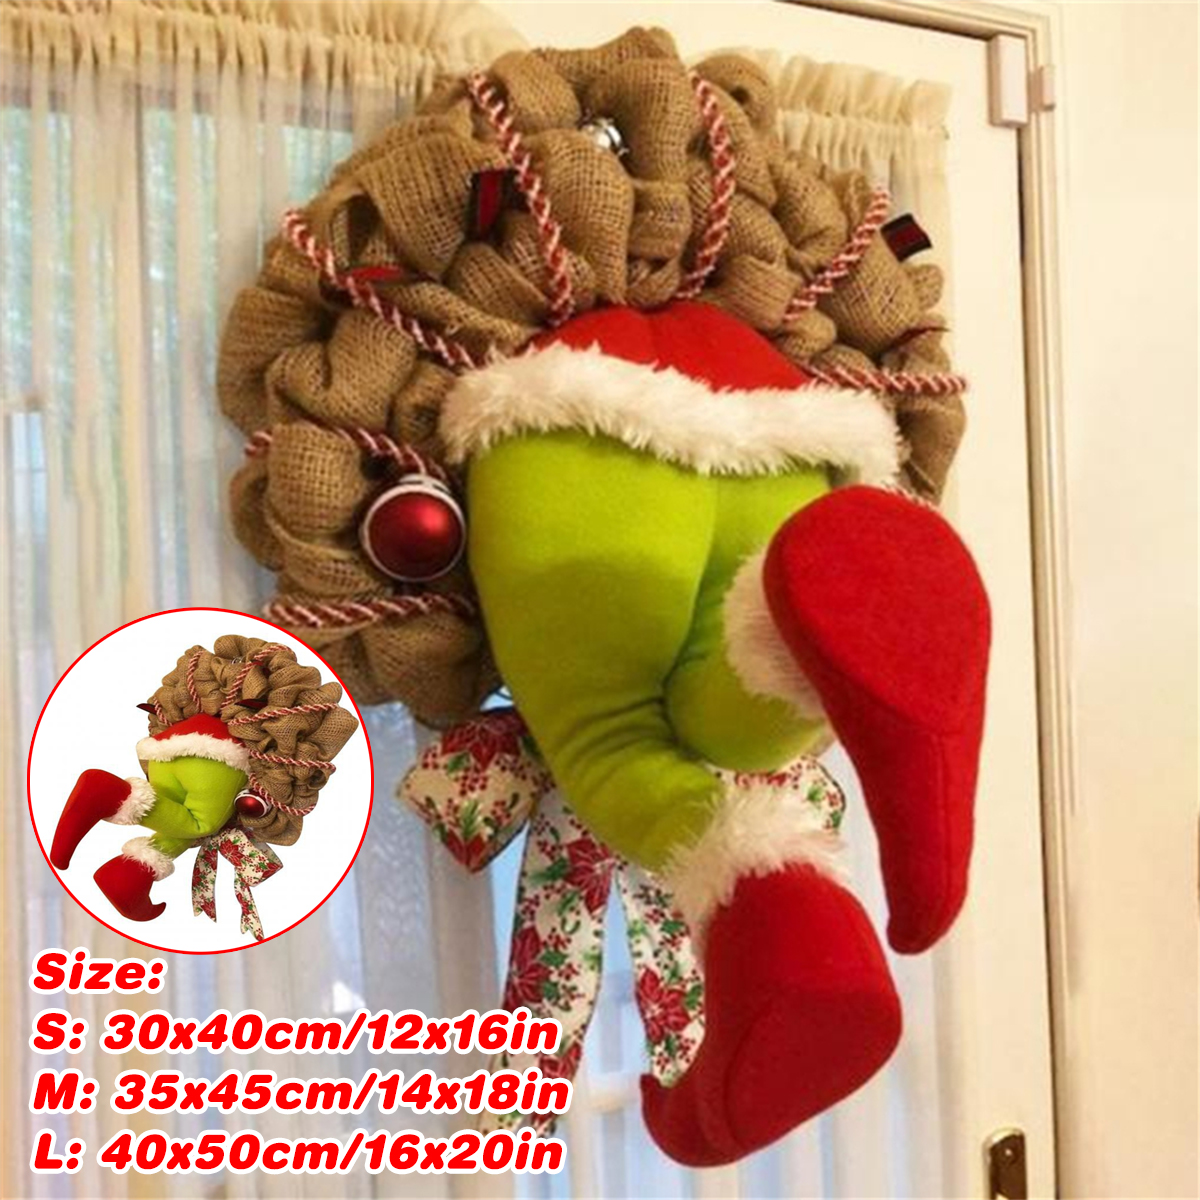 Christmas-Thief-Stole-Christmas-Burlap-Wreath-Christmas-Decorations-Santa-Claus-1834302-1